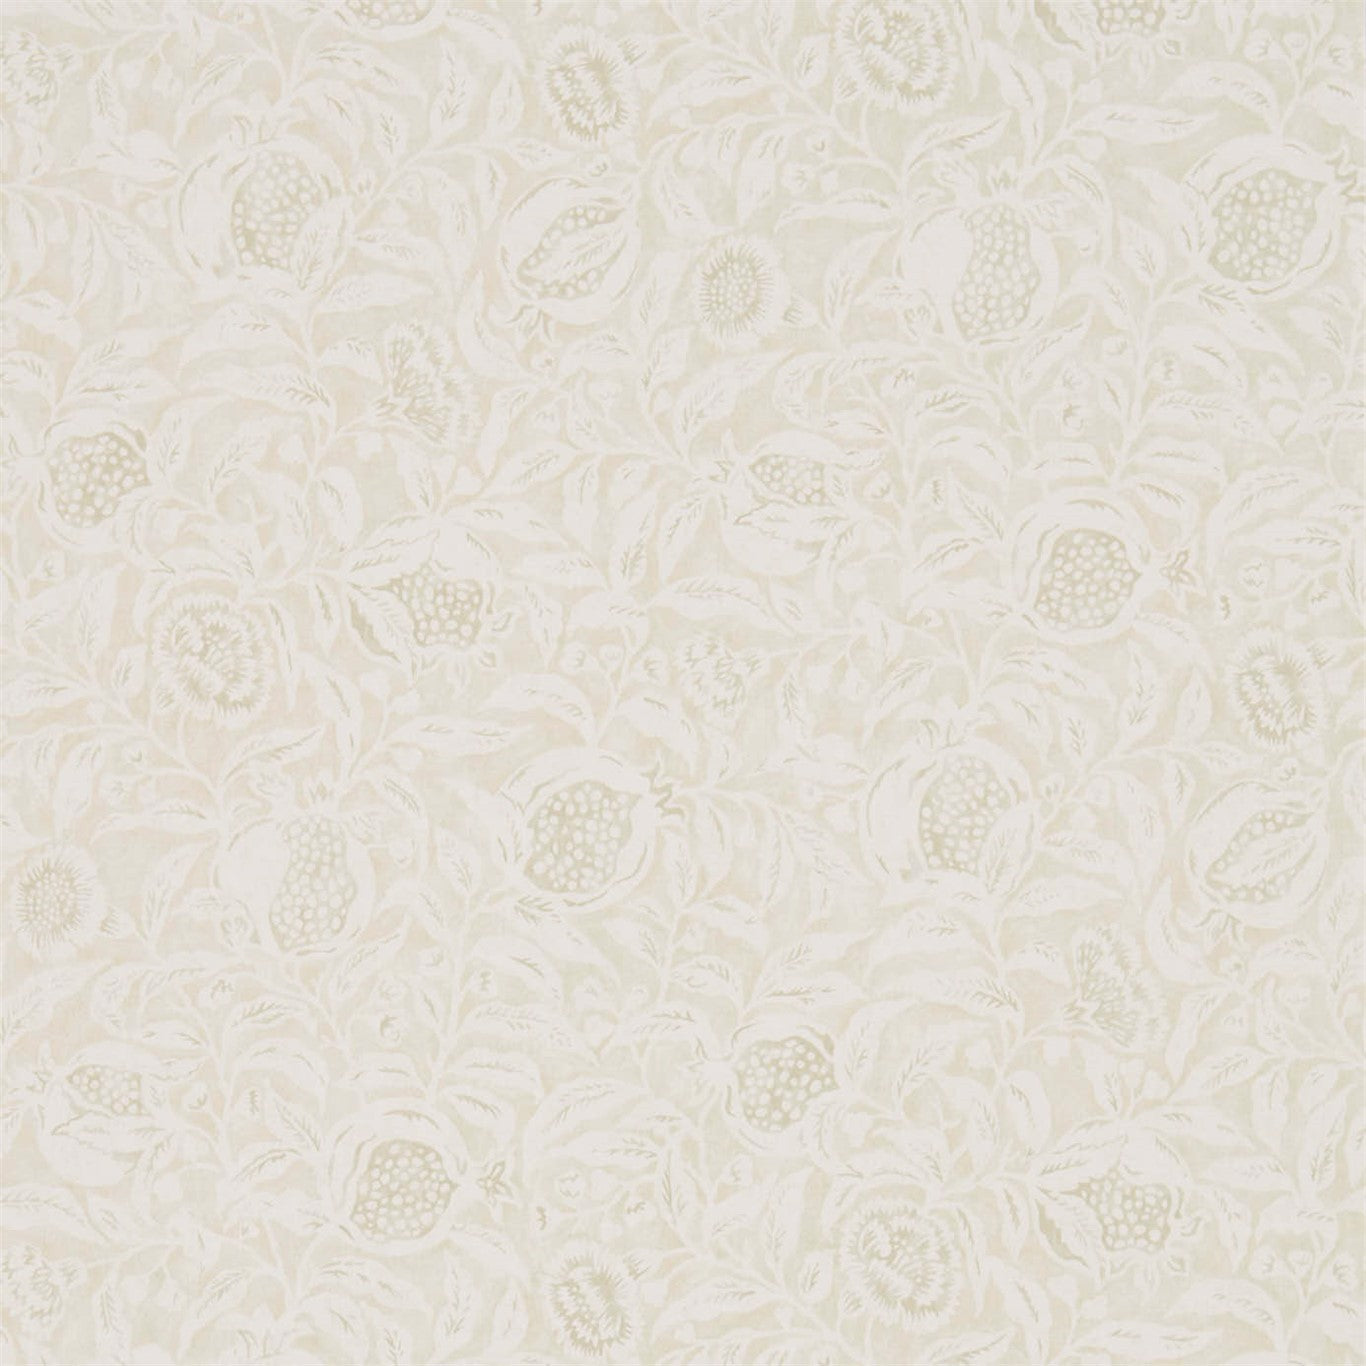 Annandale Ivory/Stone Wallpaper DDAM216396 by Sanderson